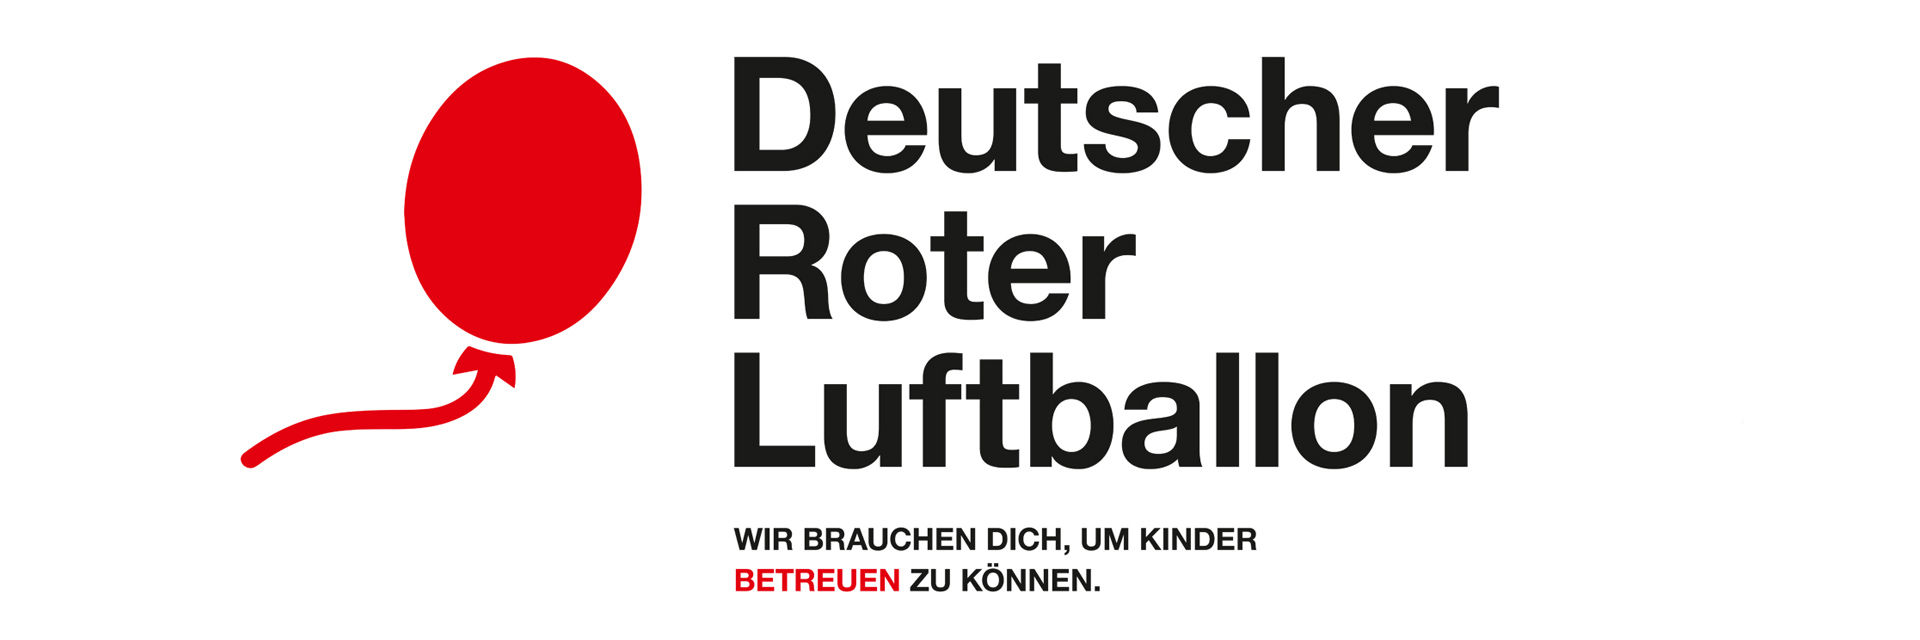 Grafik: DRK-Kampagnenmotiv "Deutscher Roter Luftballon" mit Ballon-Piktogramm